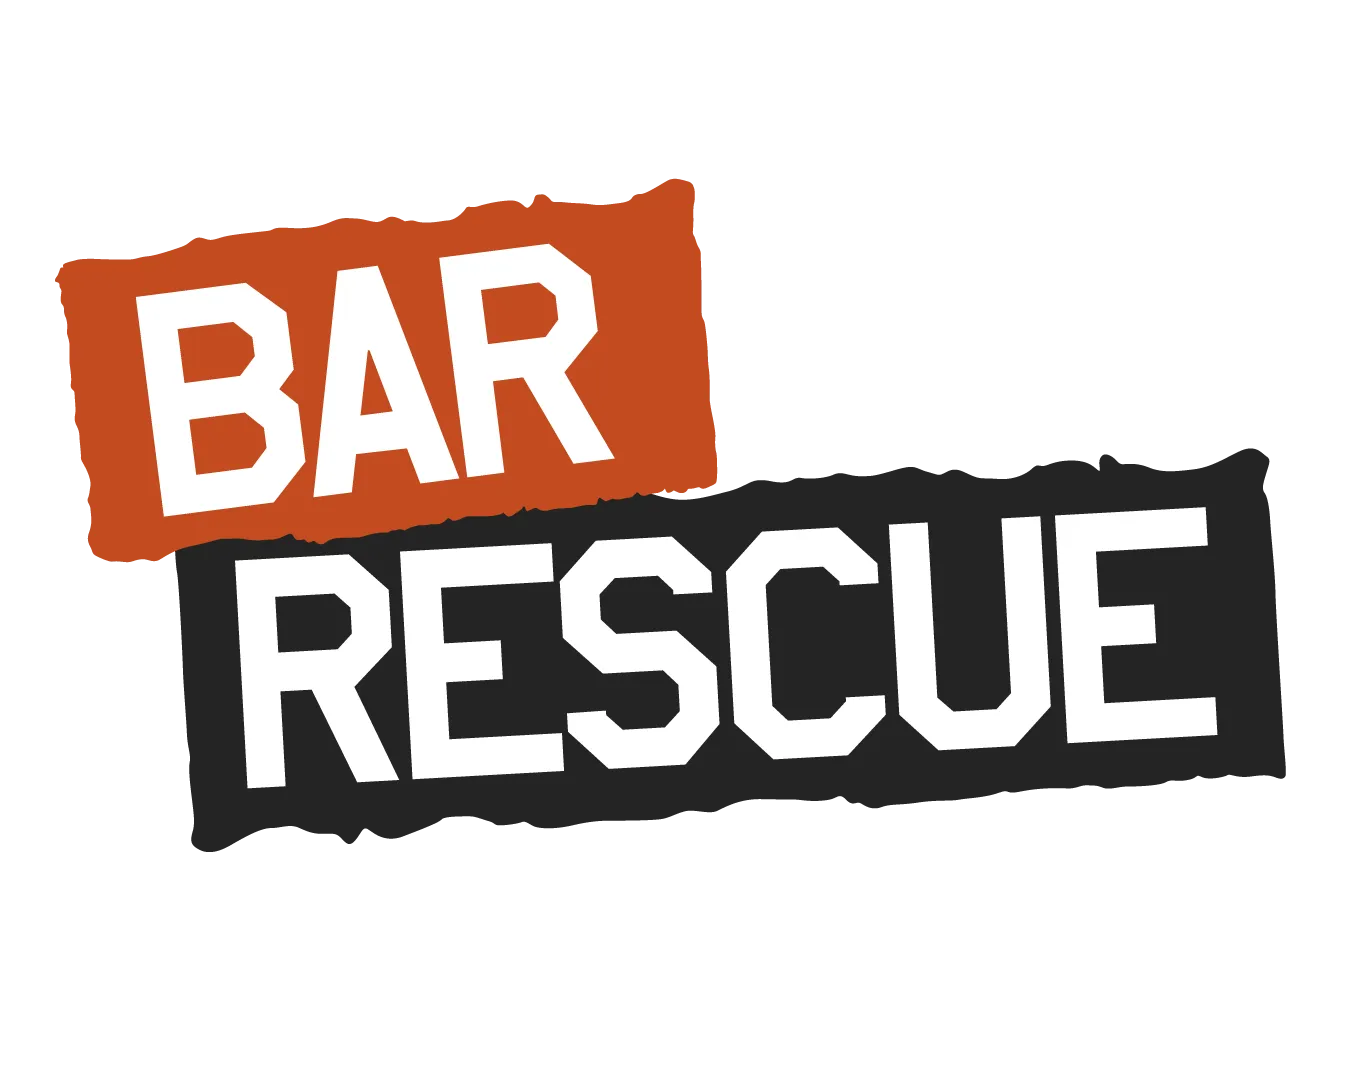 Bar rescue logo